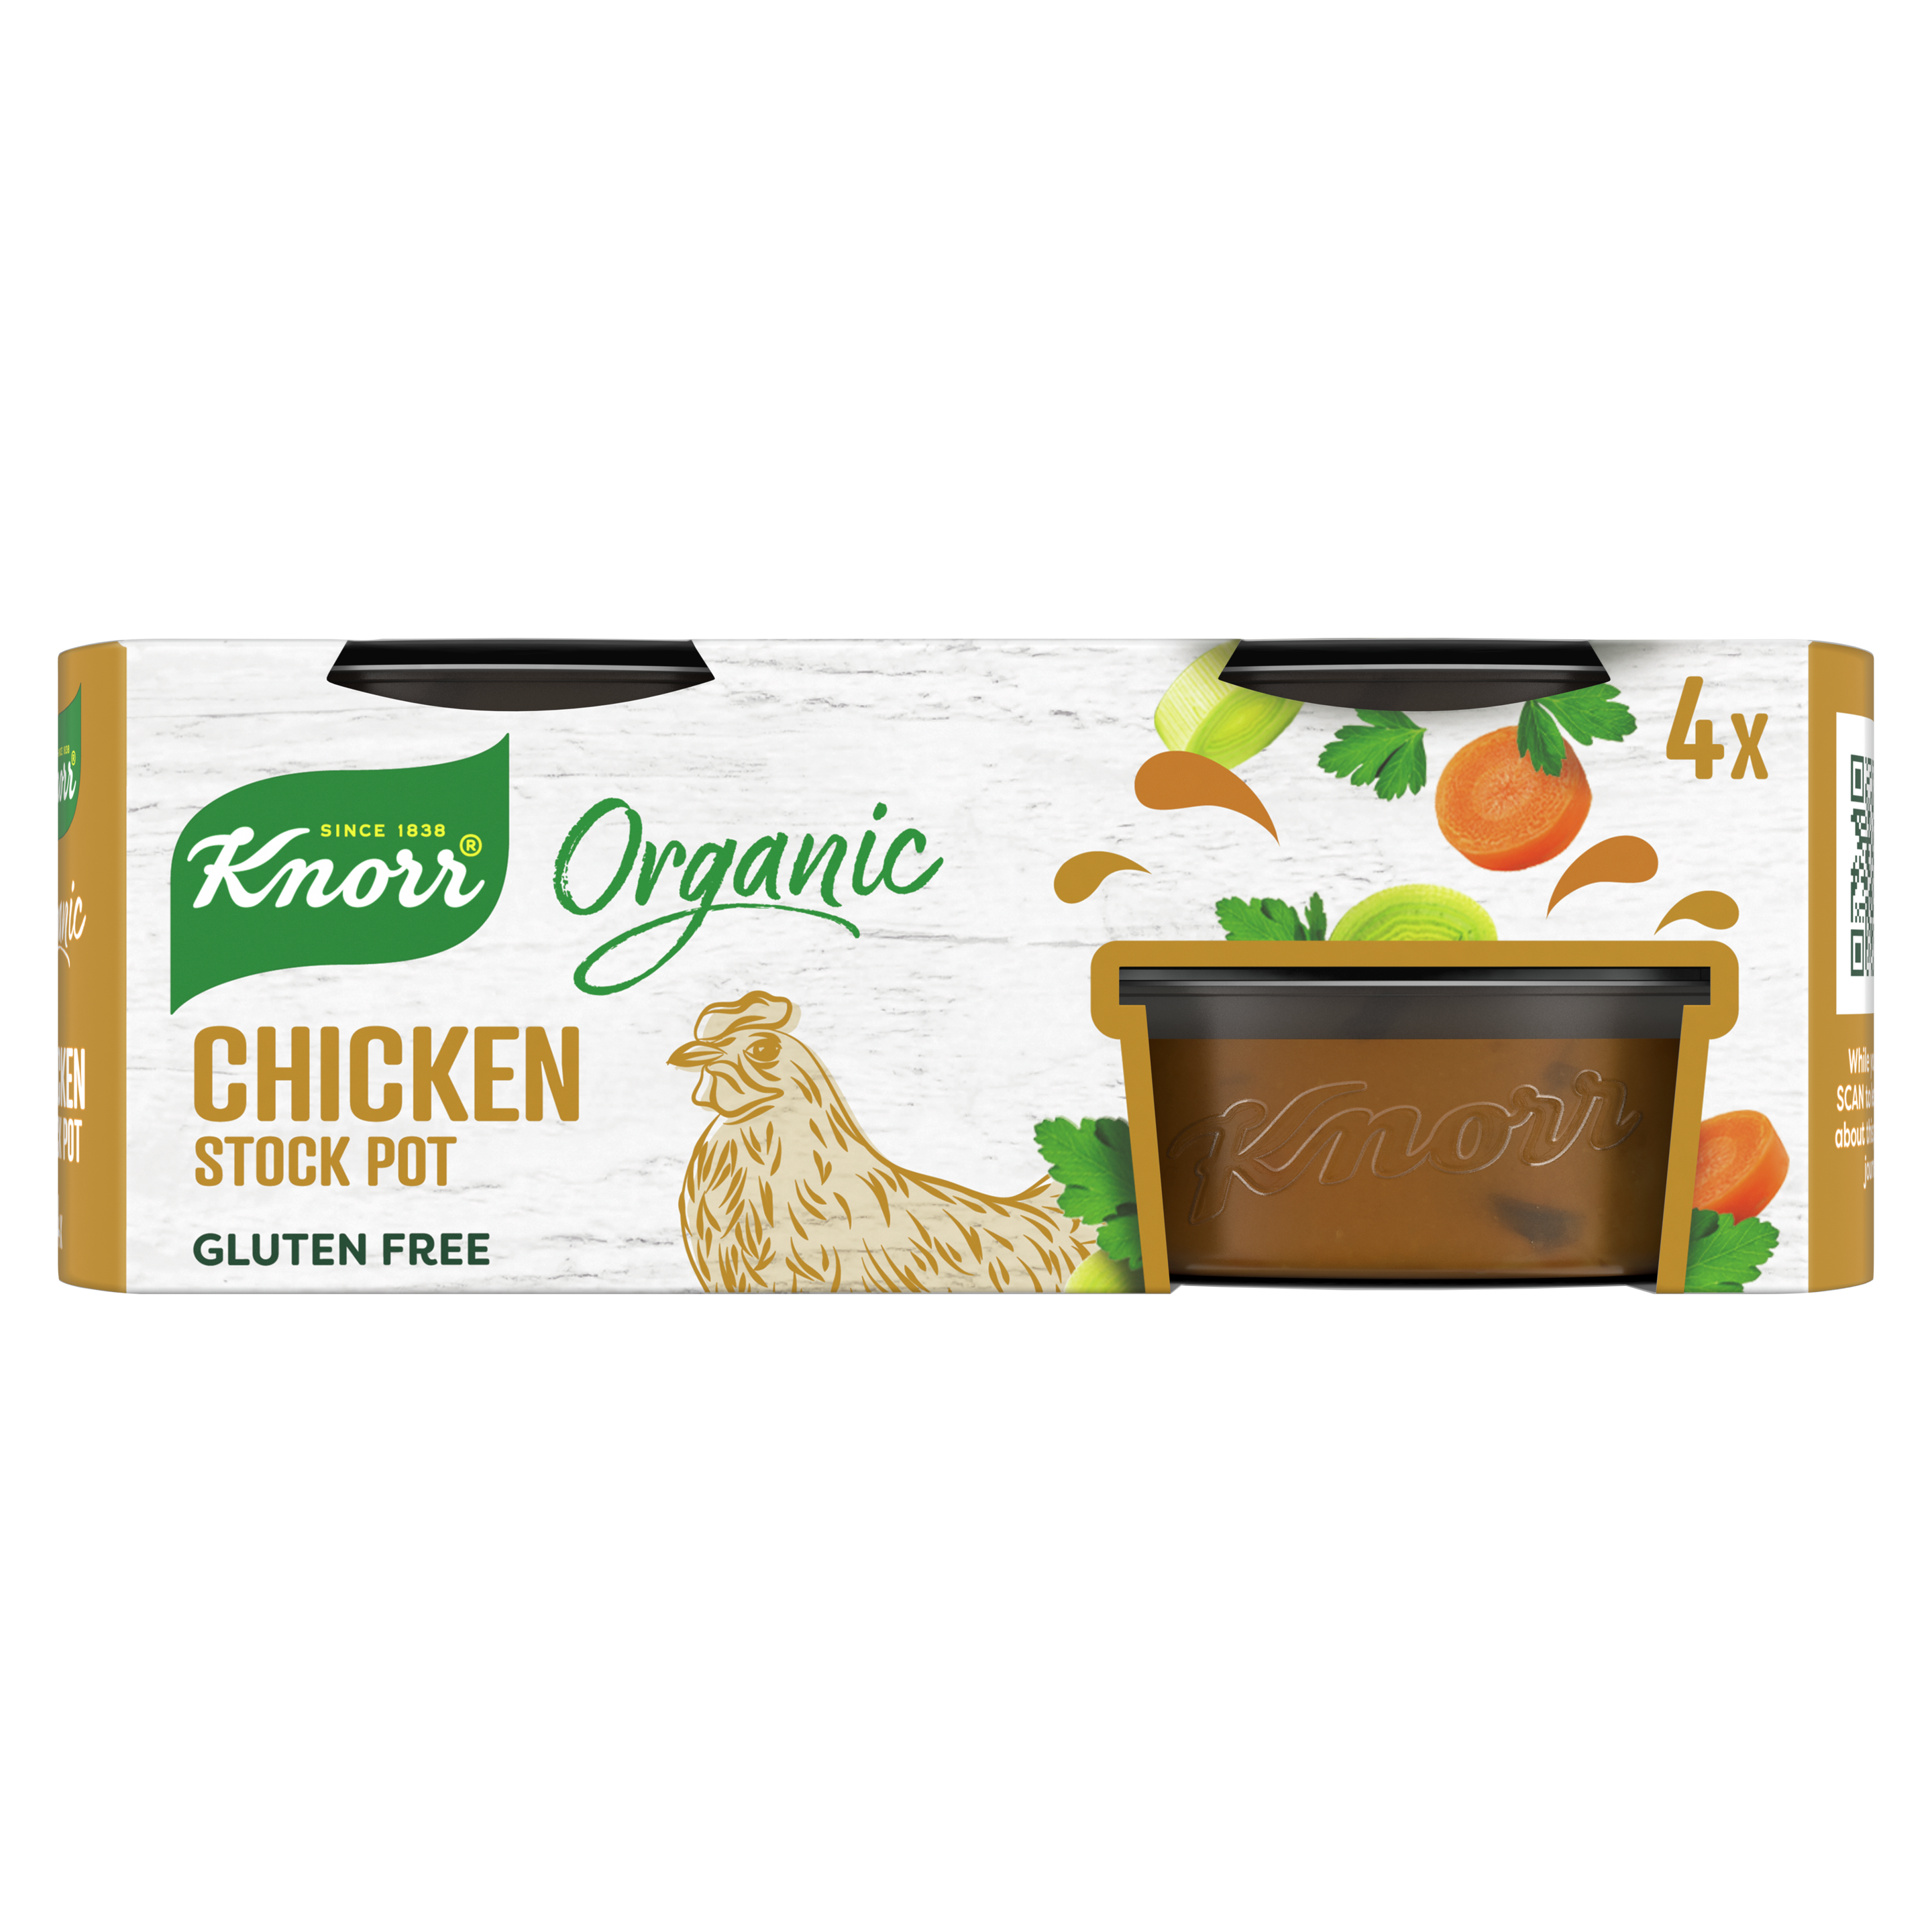 Organic Chicken Stock Pot